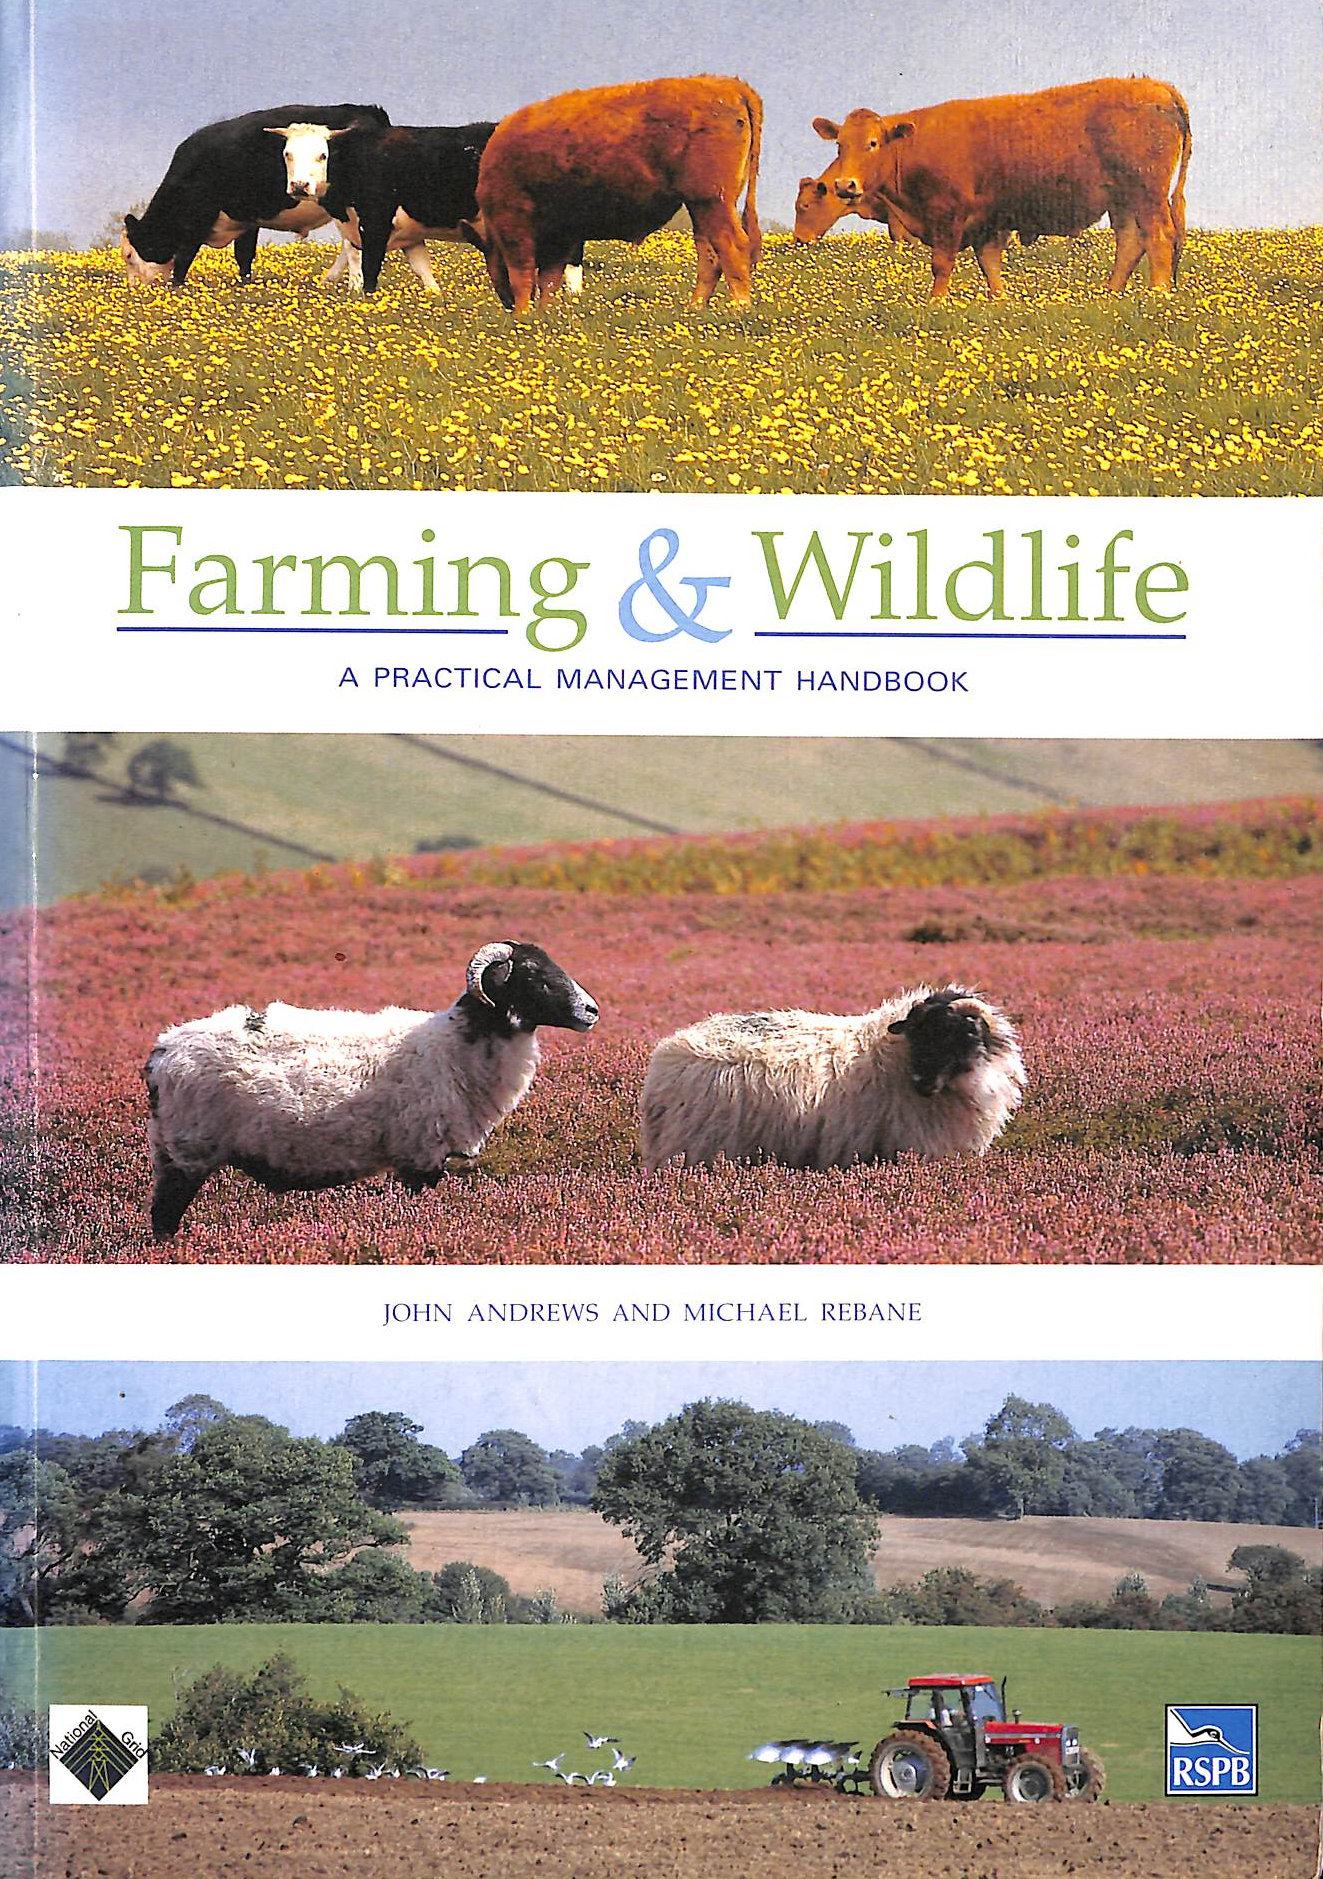 J ANDREWS, M REBANE - Farming and Wildlife: A Practical Management Handbook